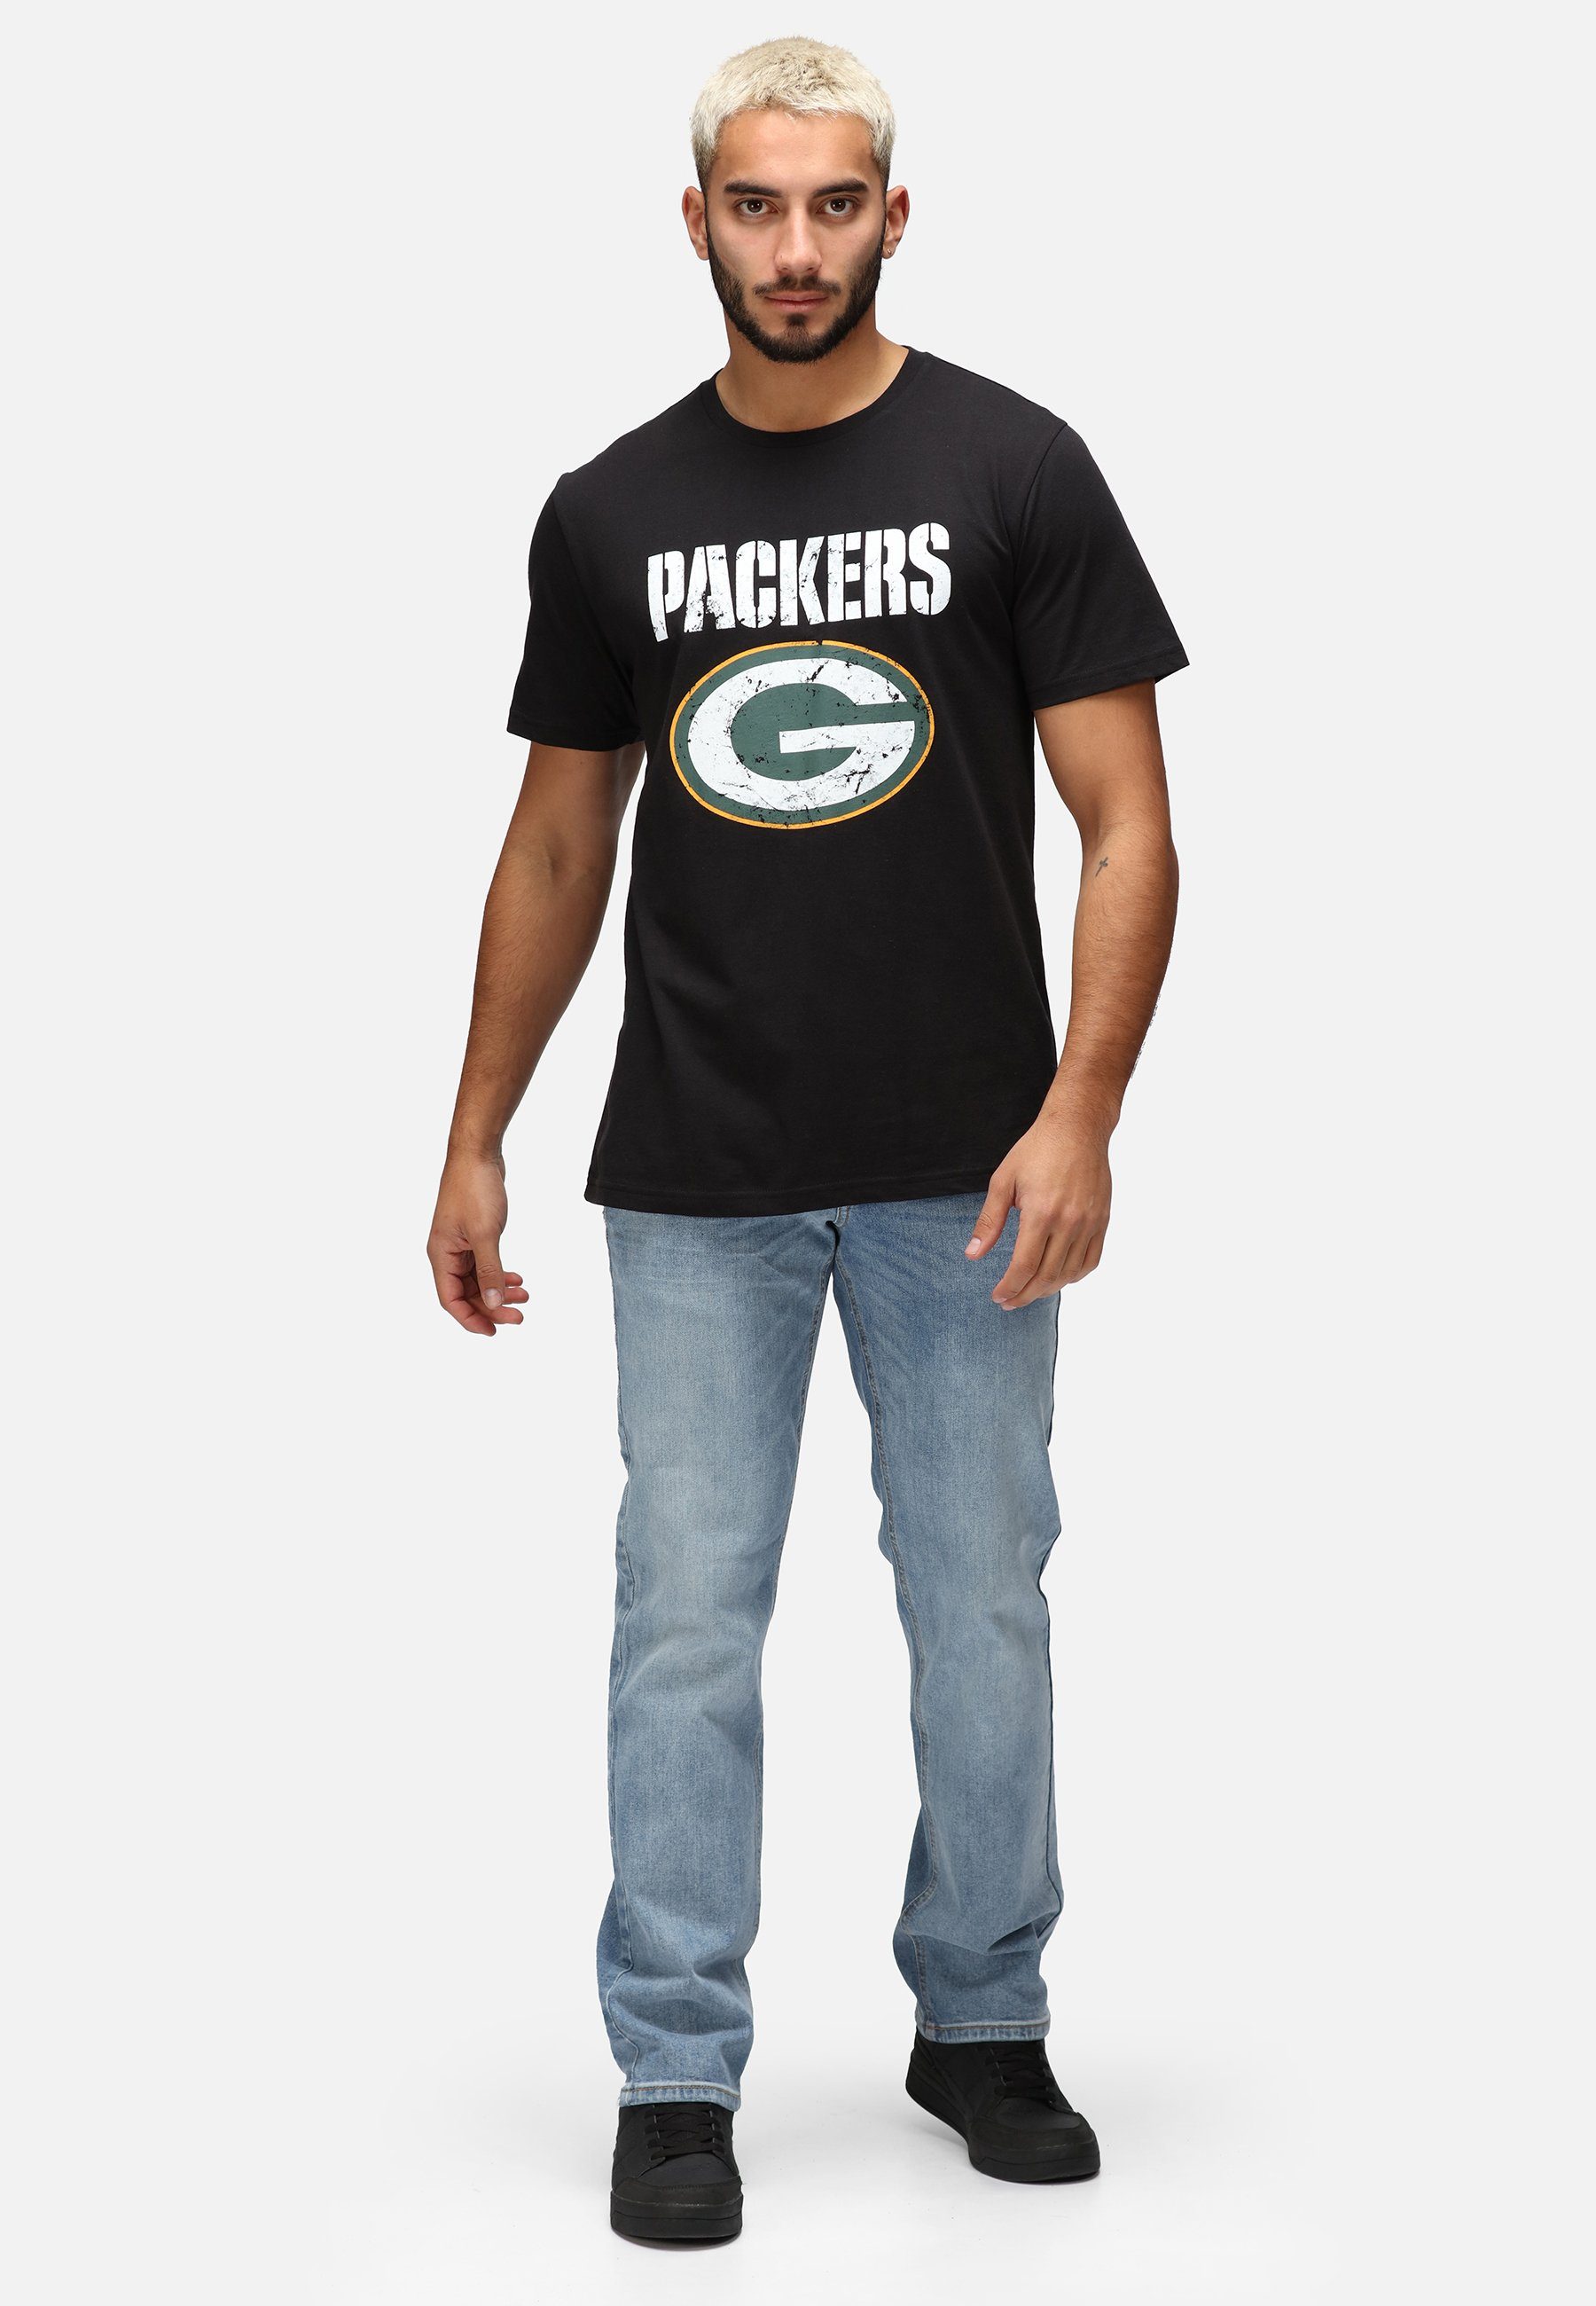 Recovered PACKERS T-Shirt Bio-Baumwolle GOTS zertifizierte LOGO NFL